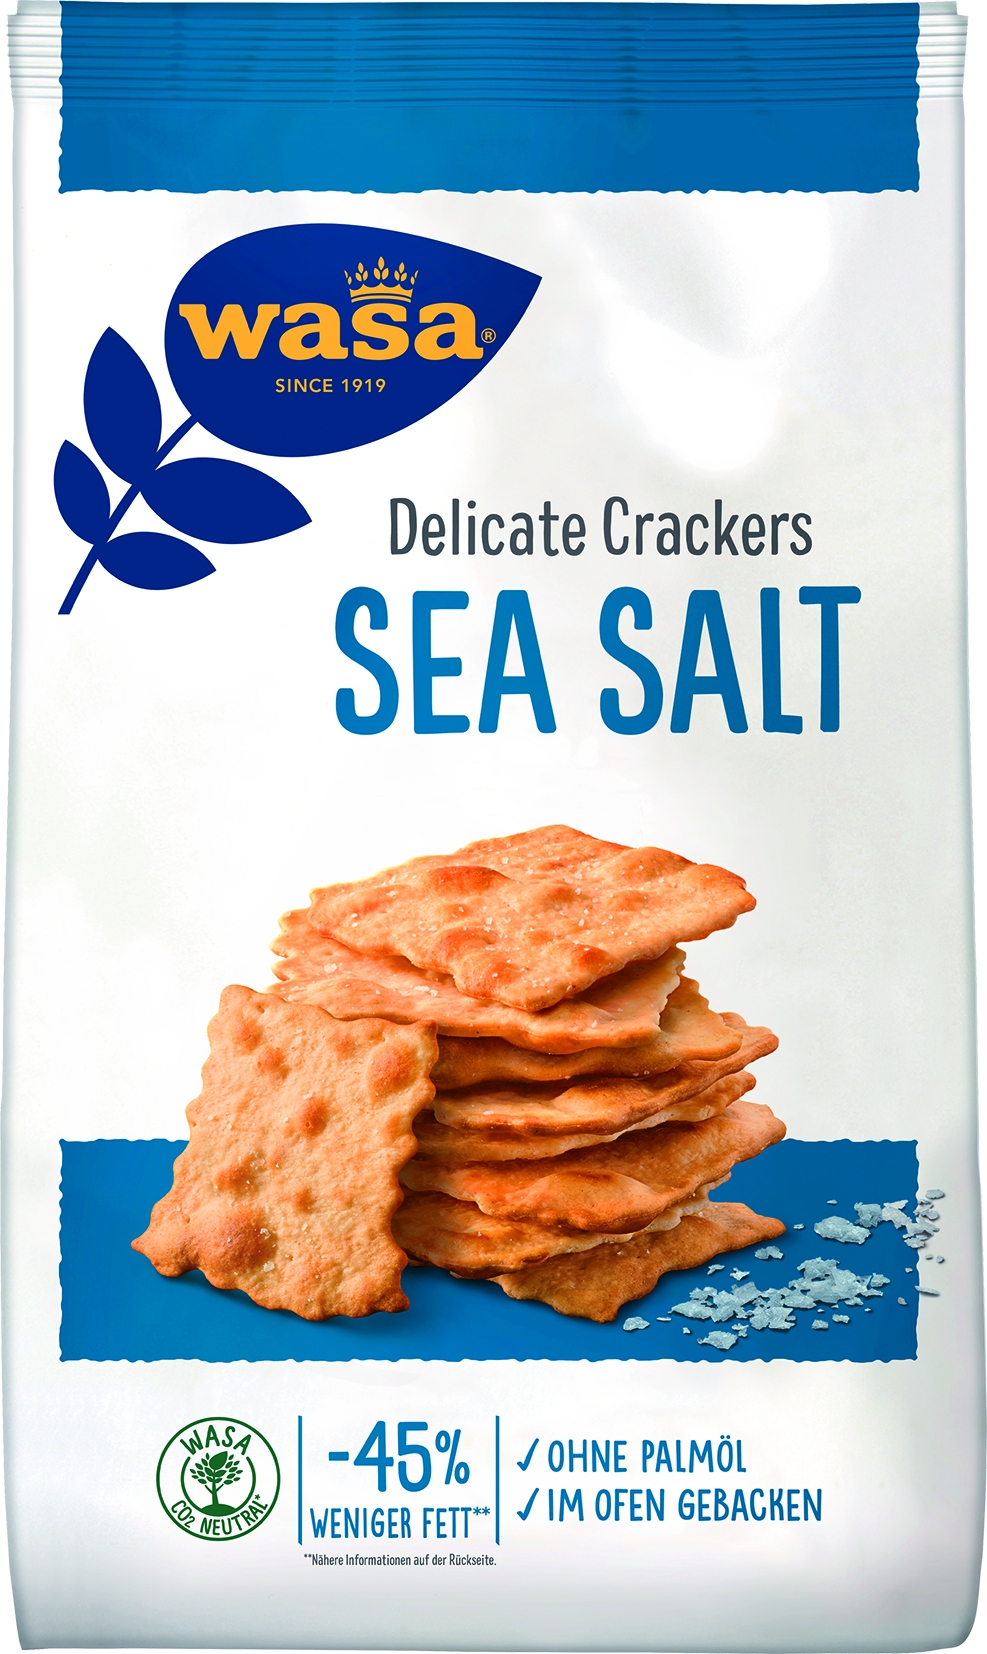 Delicate Crackers seasalt   